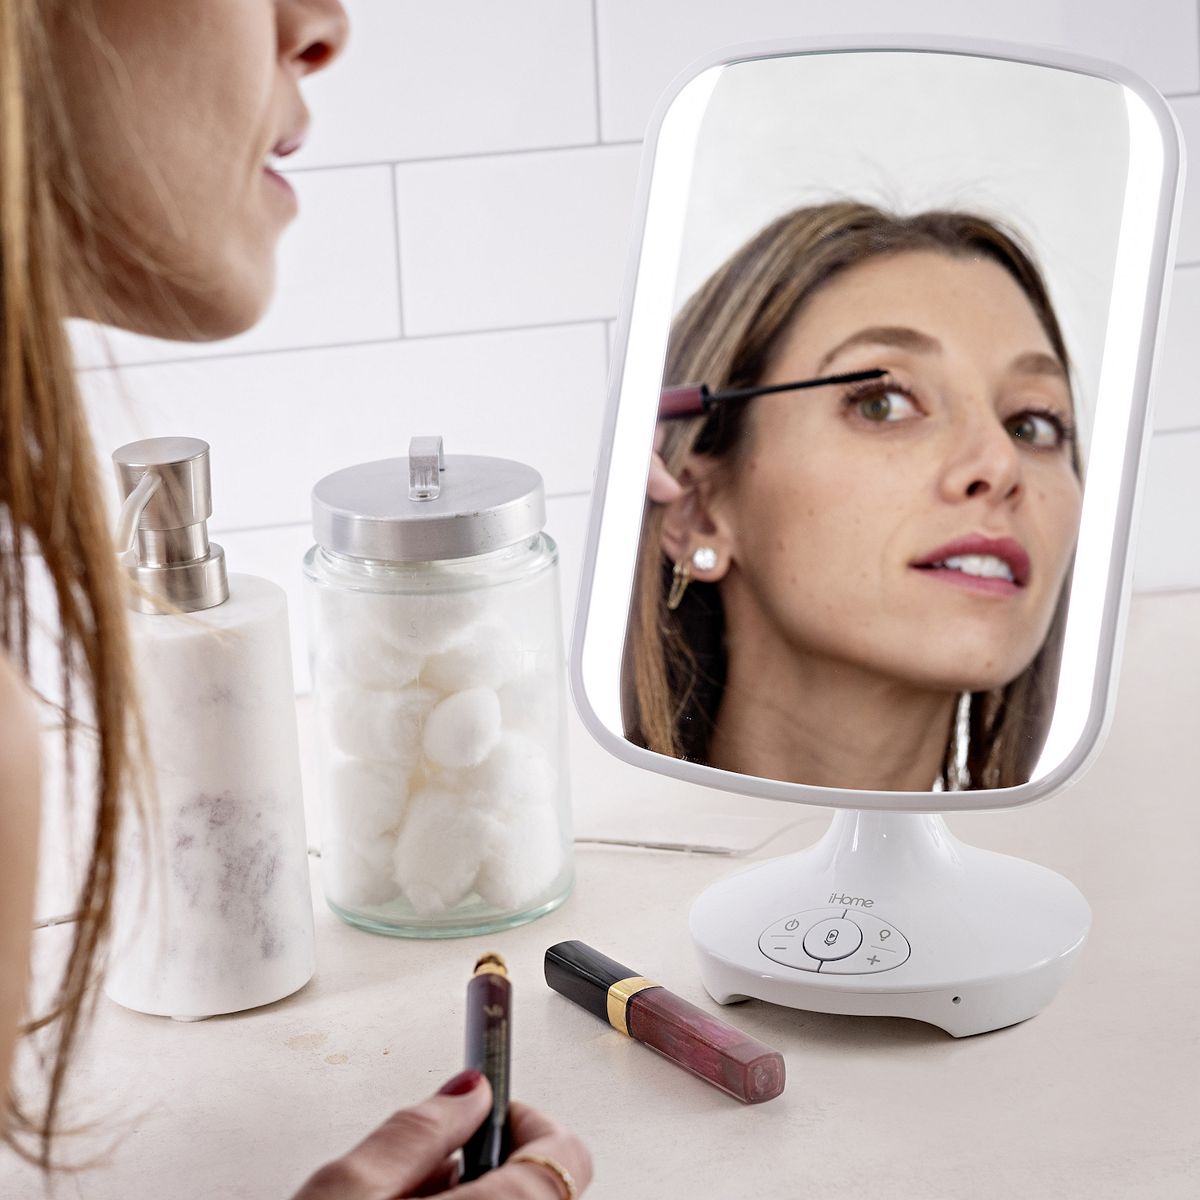 iHome Reflect II Vanity Mirror With Bluetooth, Speakerphone & USB Charging